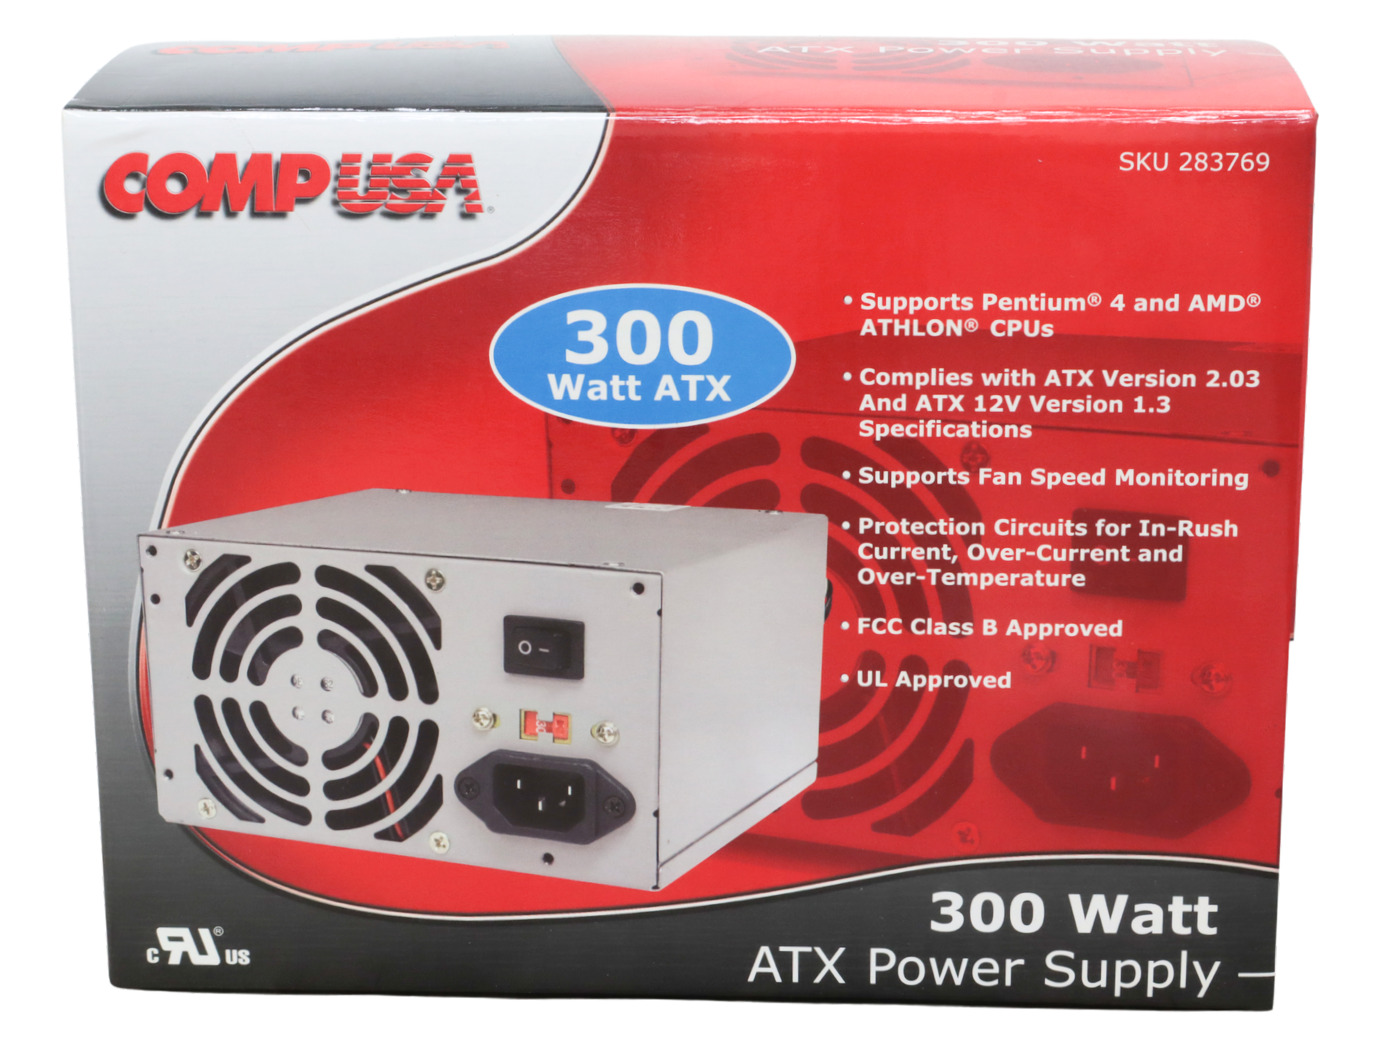 COMP USA 300 Watt ATX Power Supply